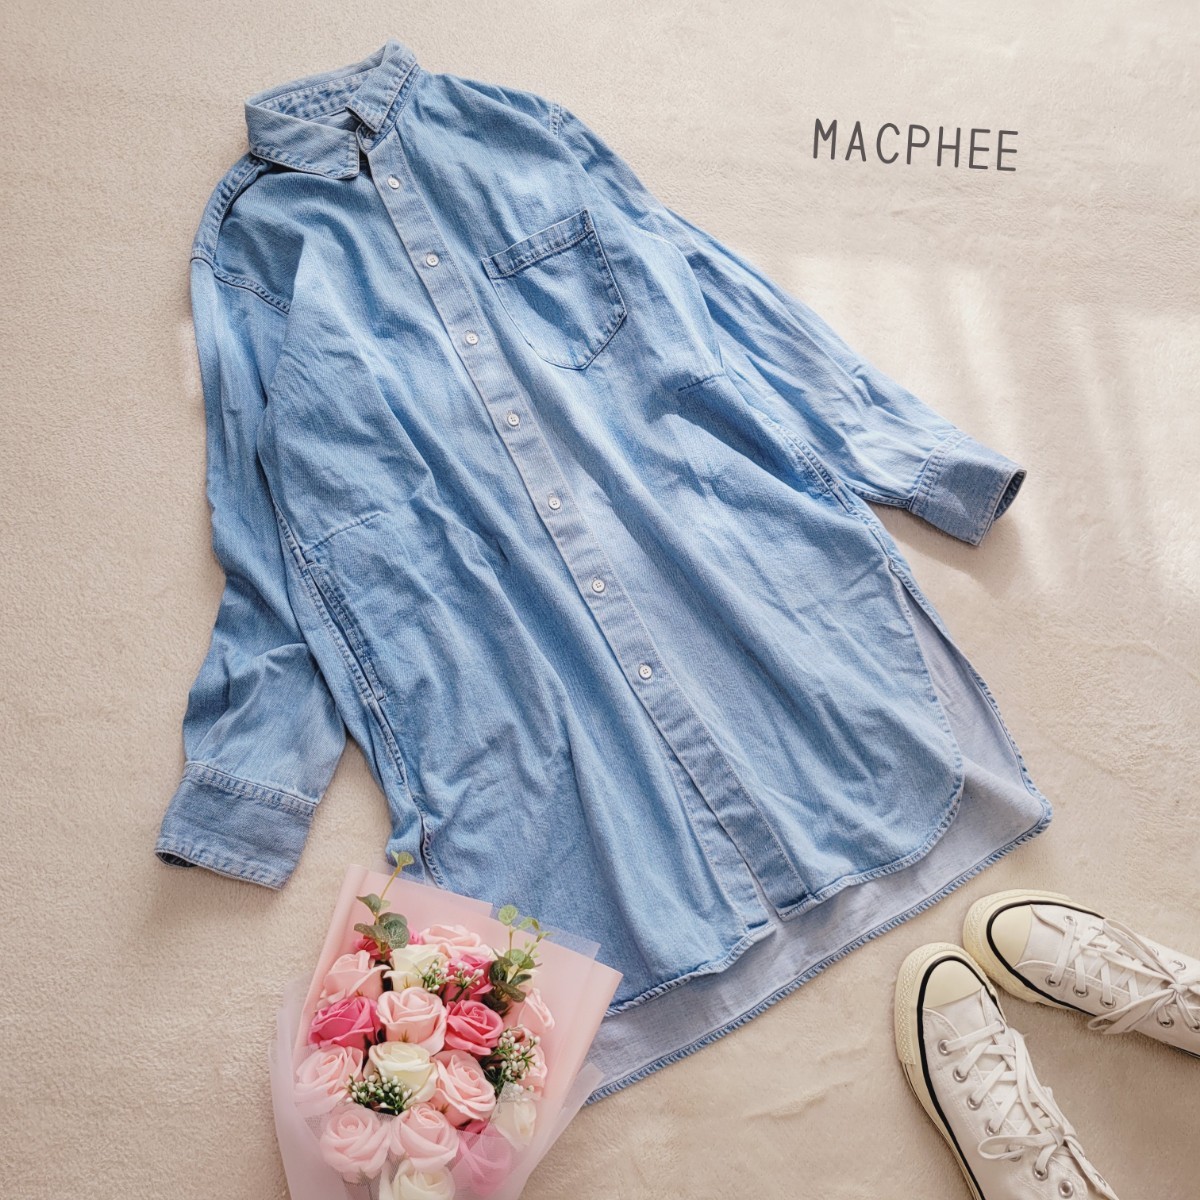  Tomorrowland McAfee Denim рубашка One-piece * размер 36* весна!TOMORROWLAND MACPHEE перо ткань 